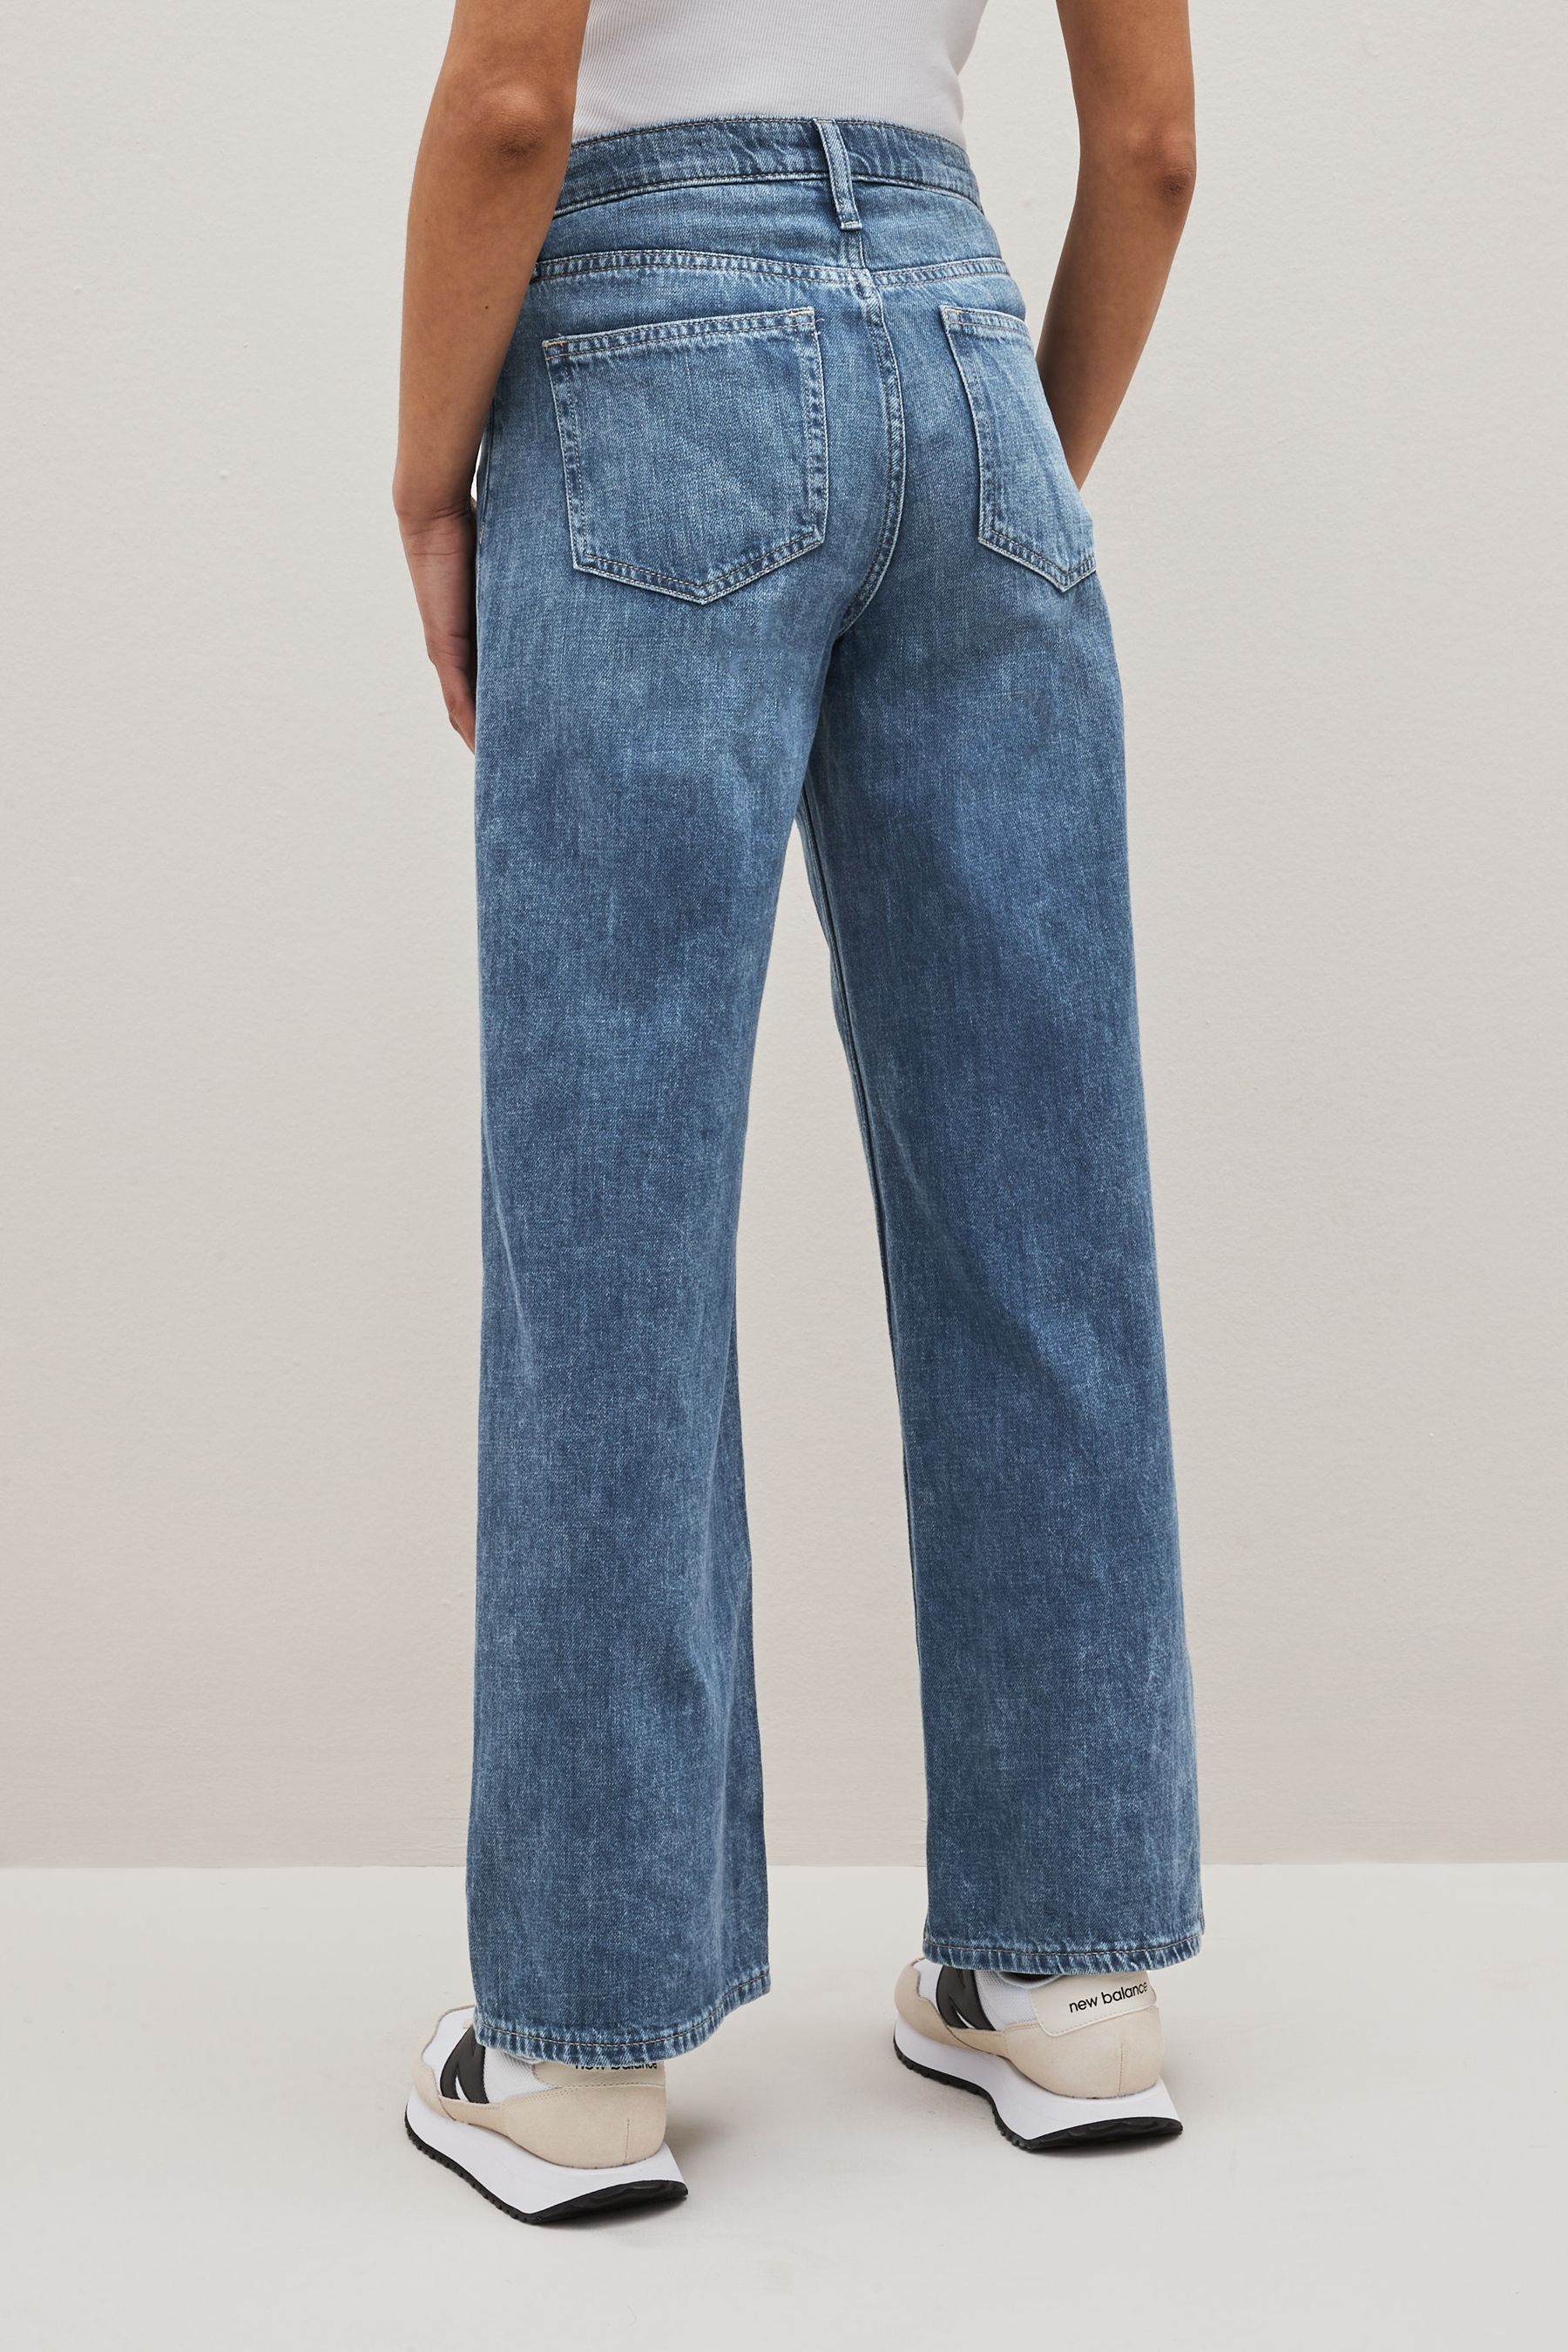 Buy Gap Wide Leg Jeans from the Gap online shop